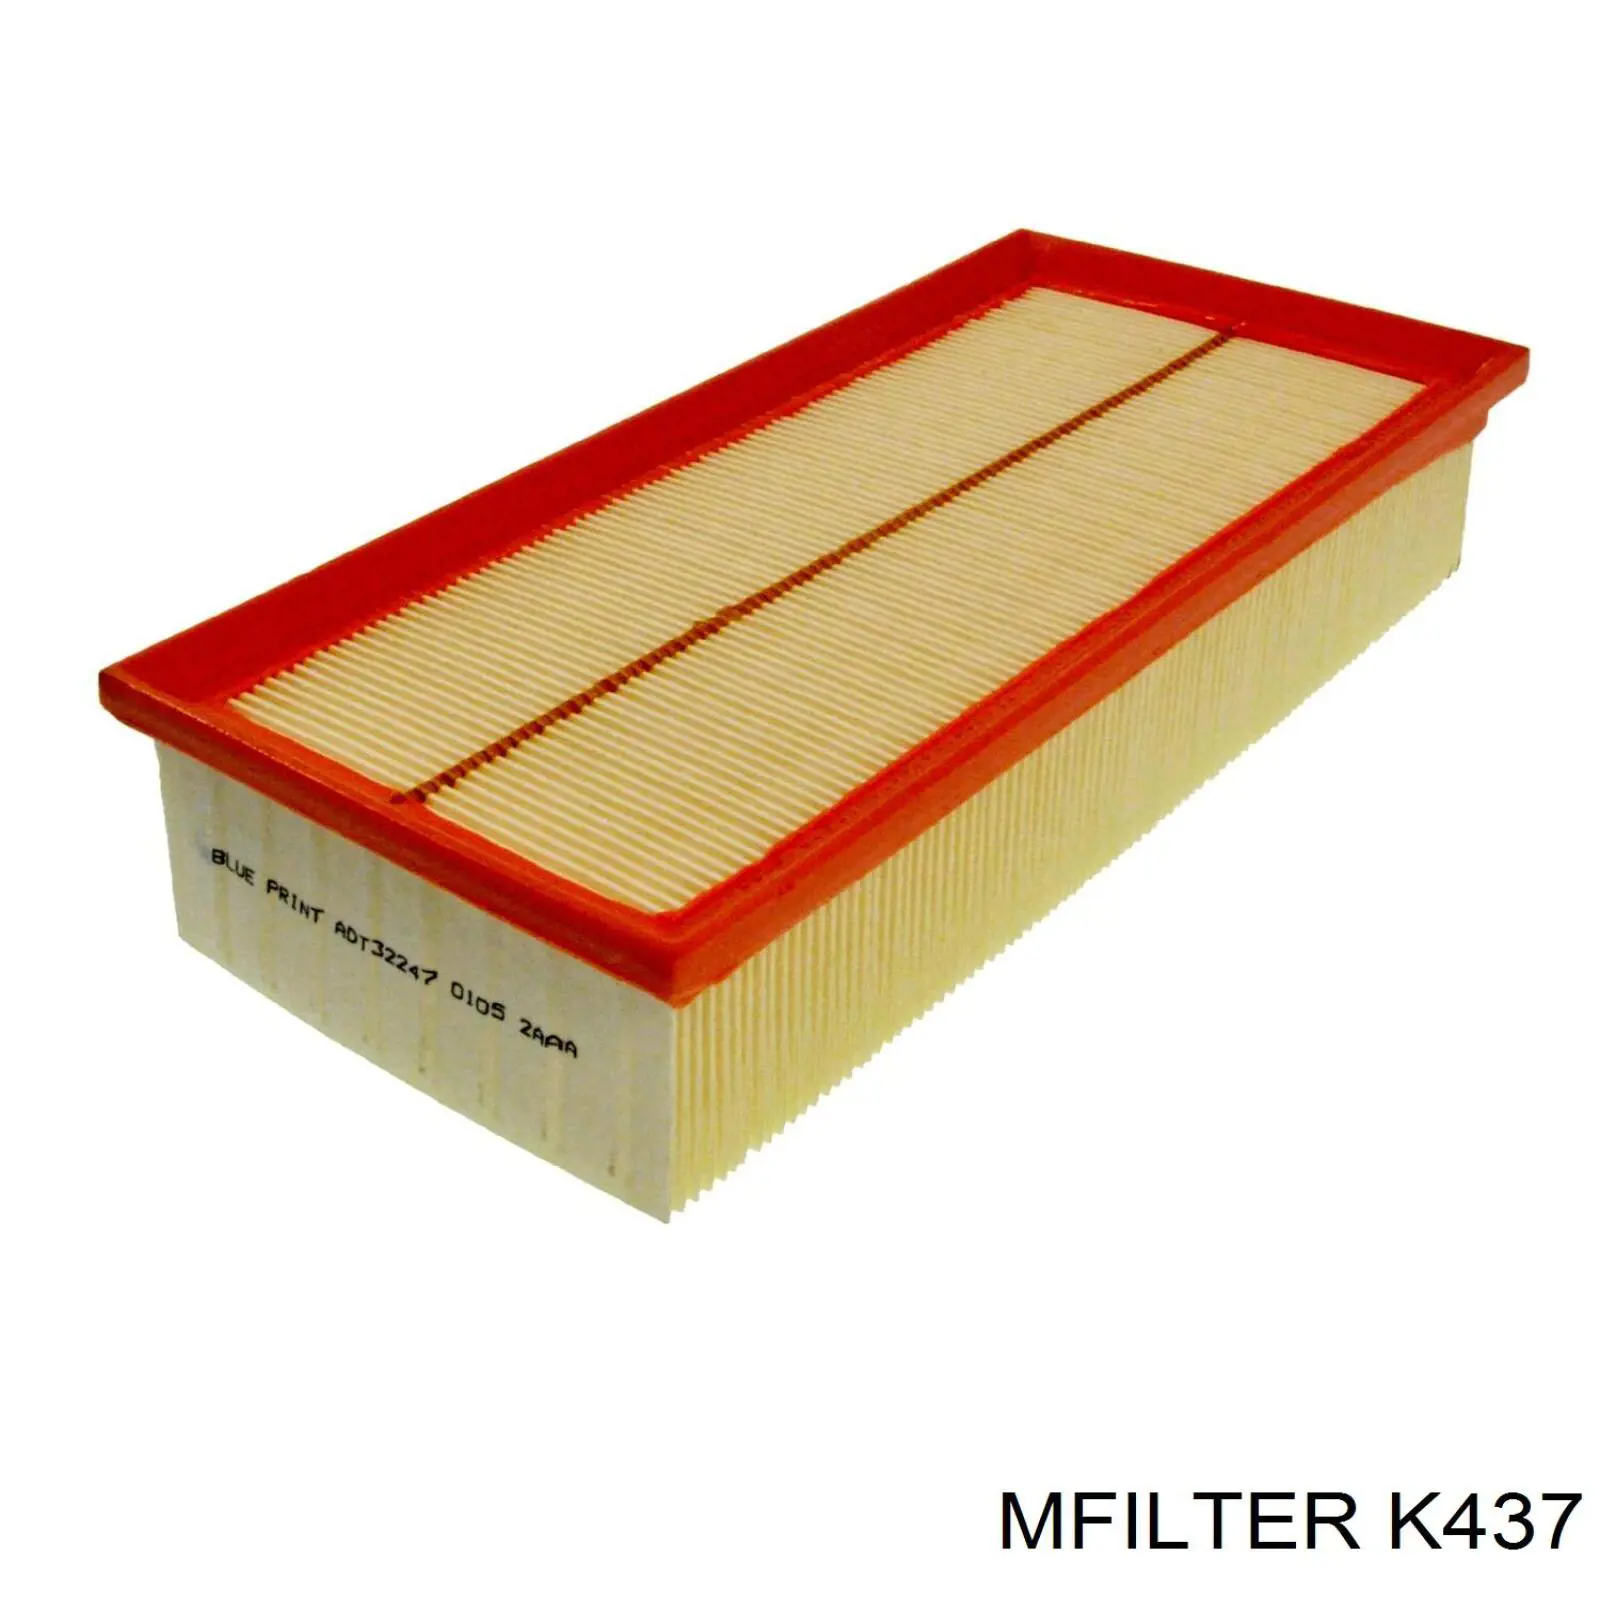 K437 Mfilter filtro de aire